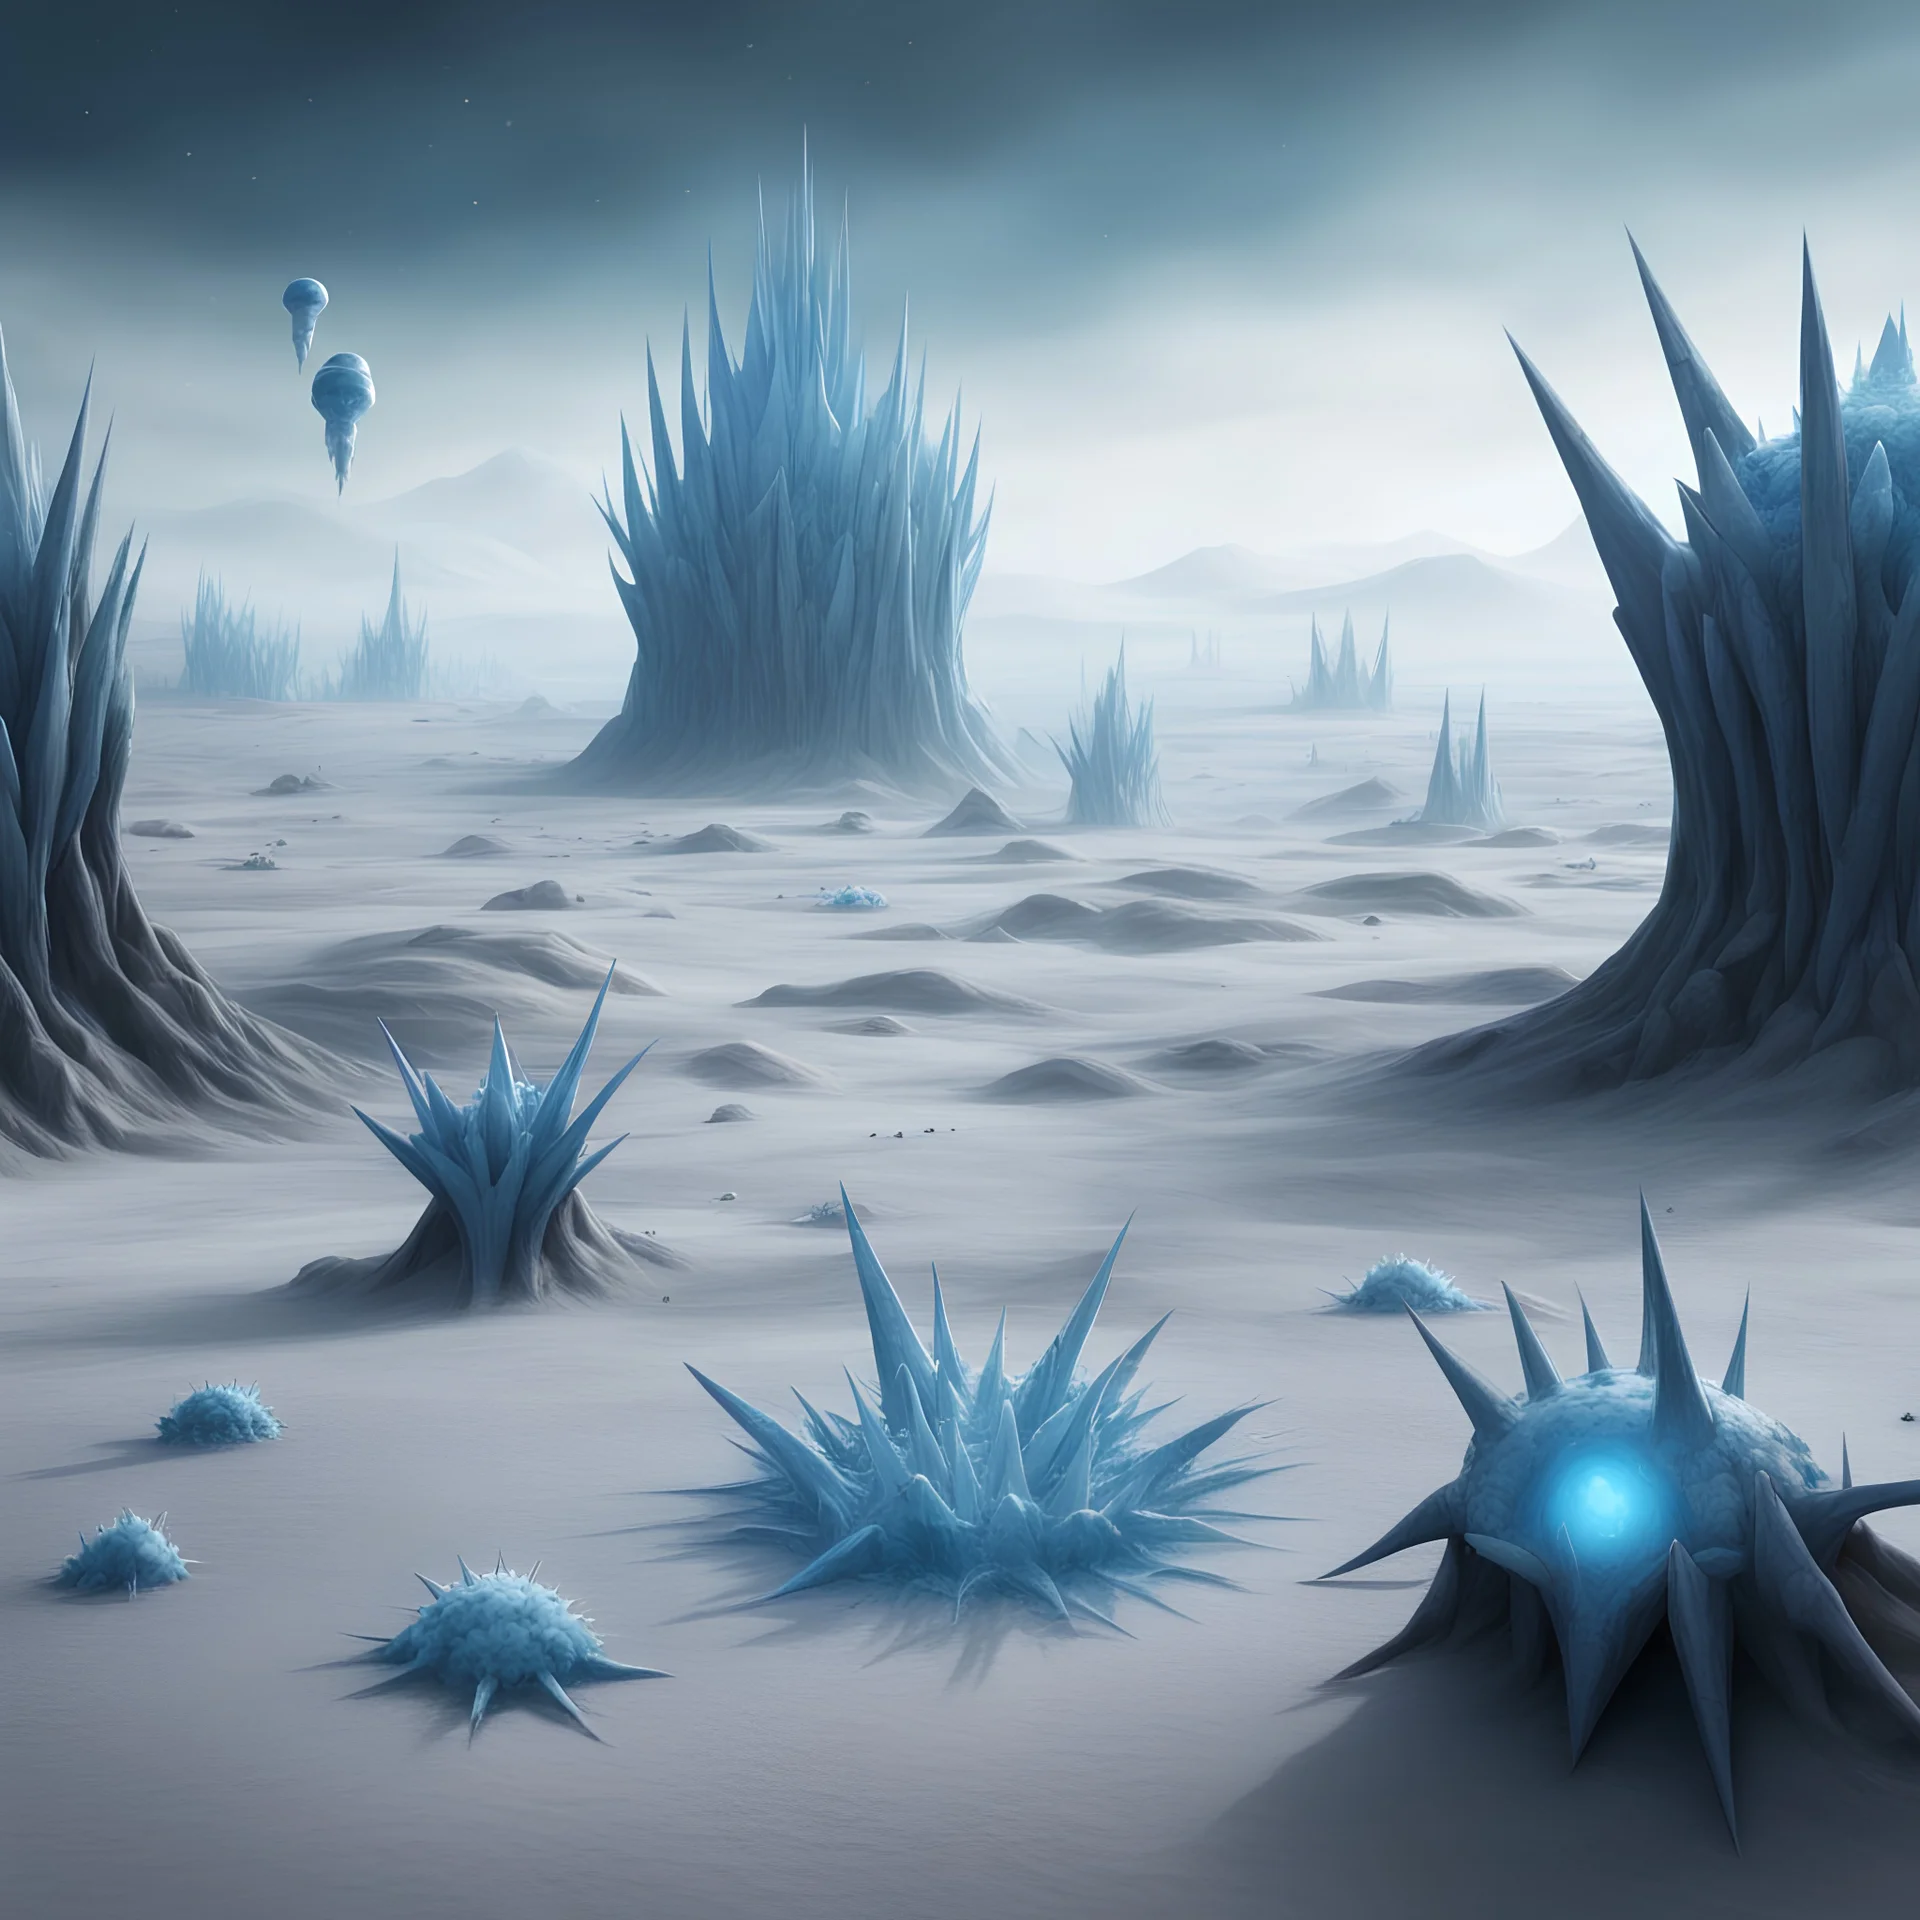 frozen alien landscape. some tiny, spiky blue alien creatures. spacecraft in the distance